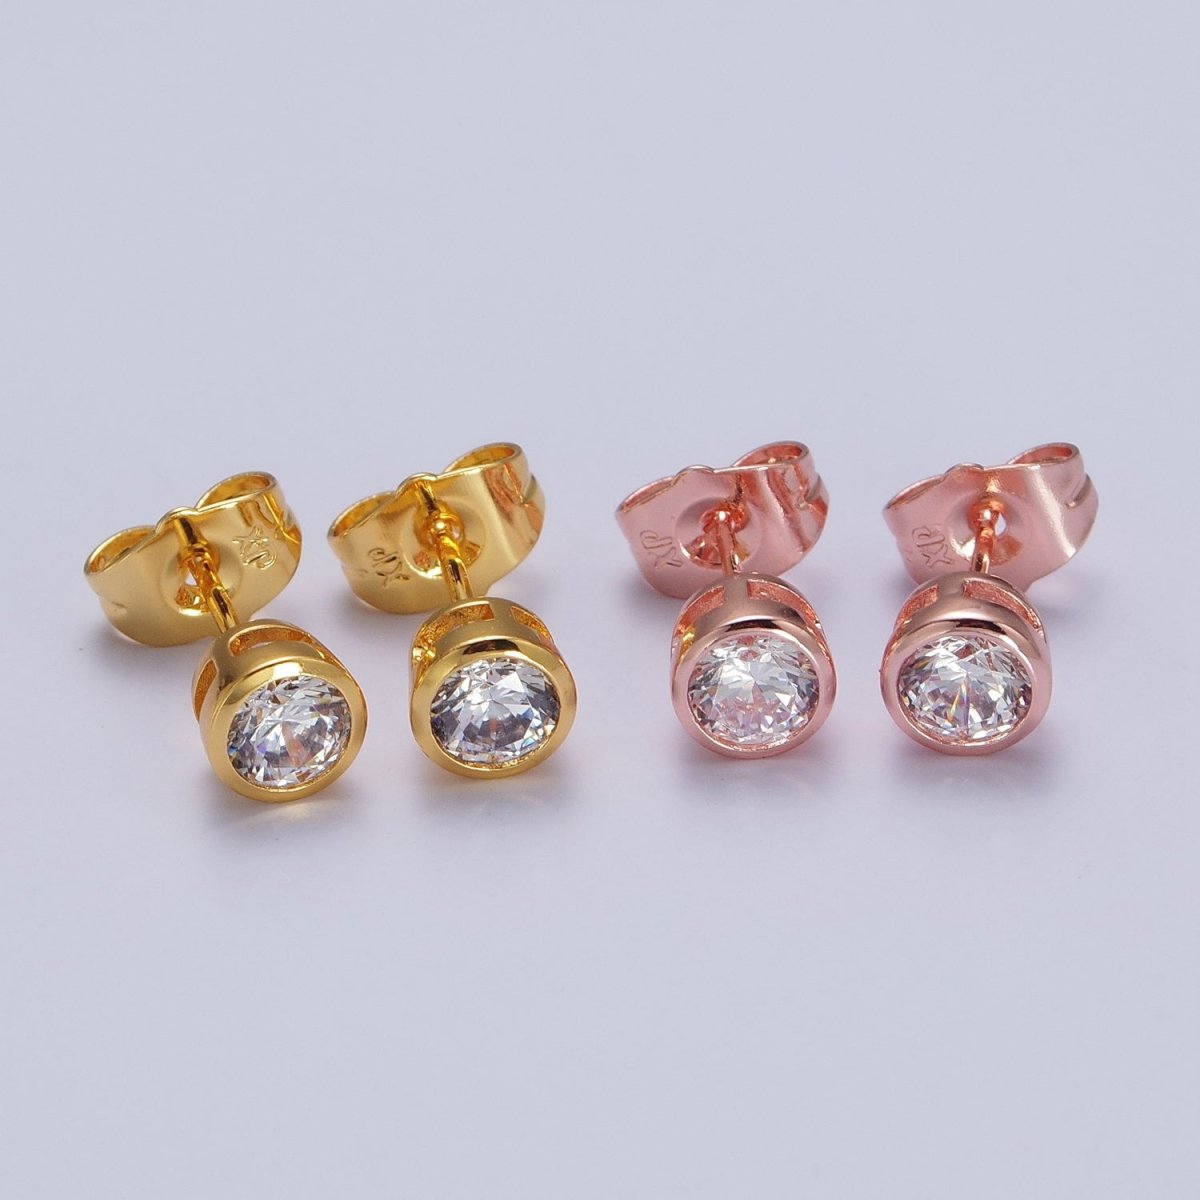 Tiny cz stud earrings - Dainty Minimalist earrings - Gold, Silver, Rose Gold stud earrings 4mm, 5mm, 6mm, 8mm 9mm 10mm | AB107 AB147 AB153 - DLUXCA